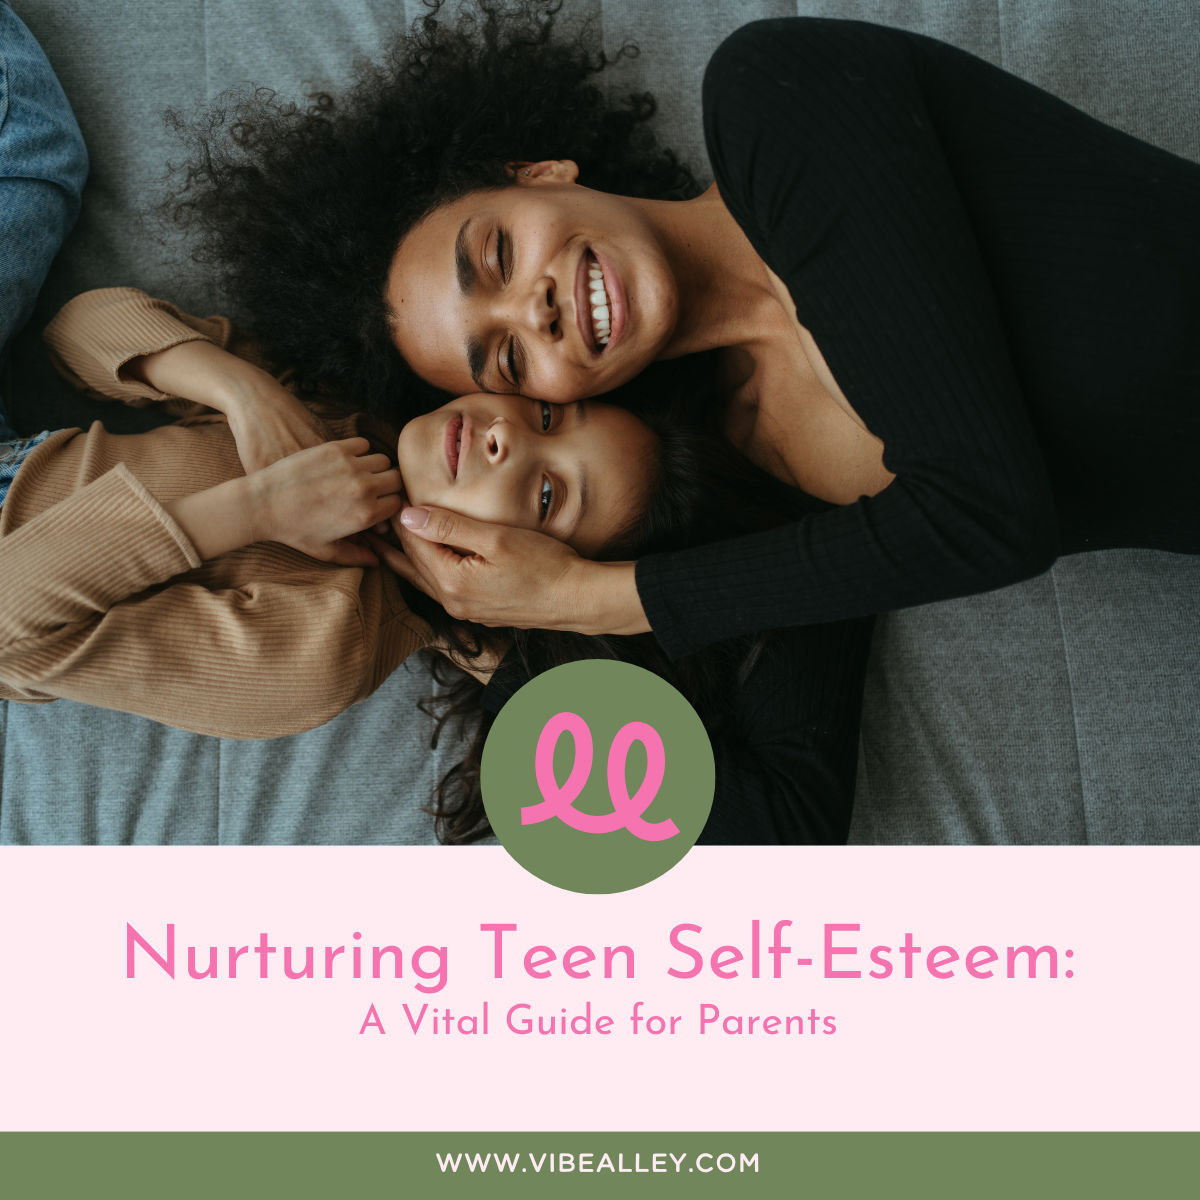 Nurturing Teen Self-Esteem: A Vital Guide for Parents